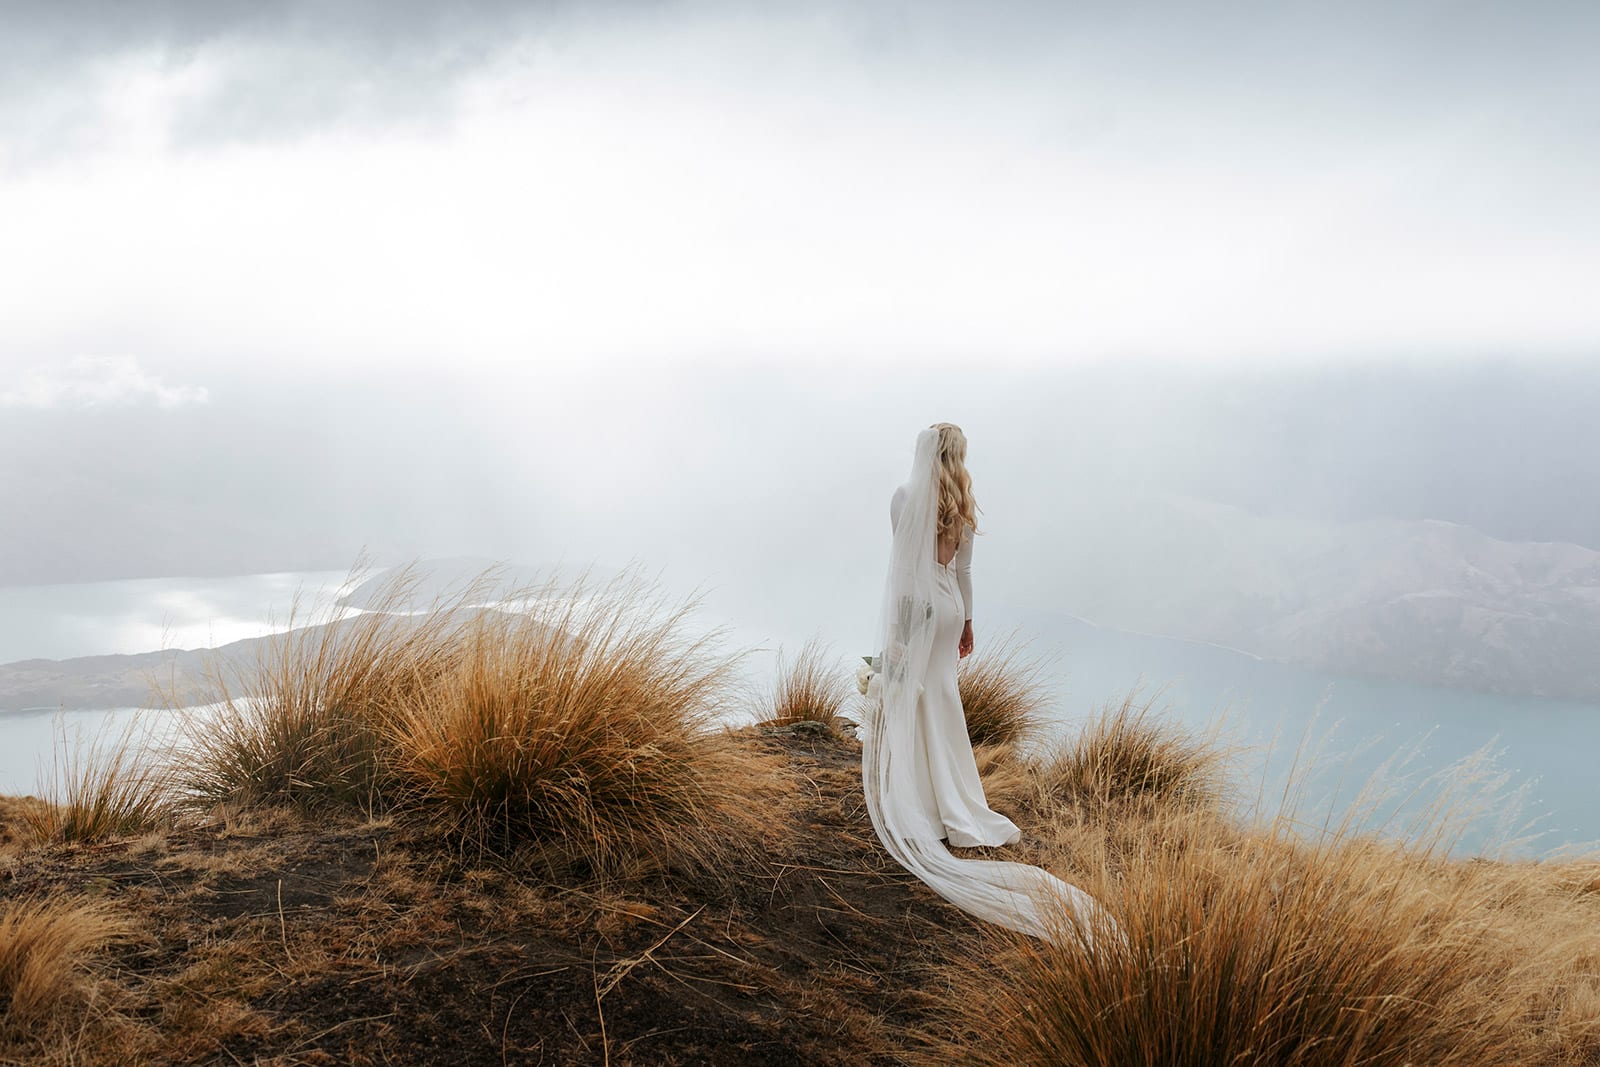 Heli Wedding in Wanaka on Coromandel Peak New Zealand on a rainy day